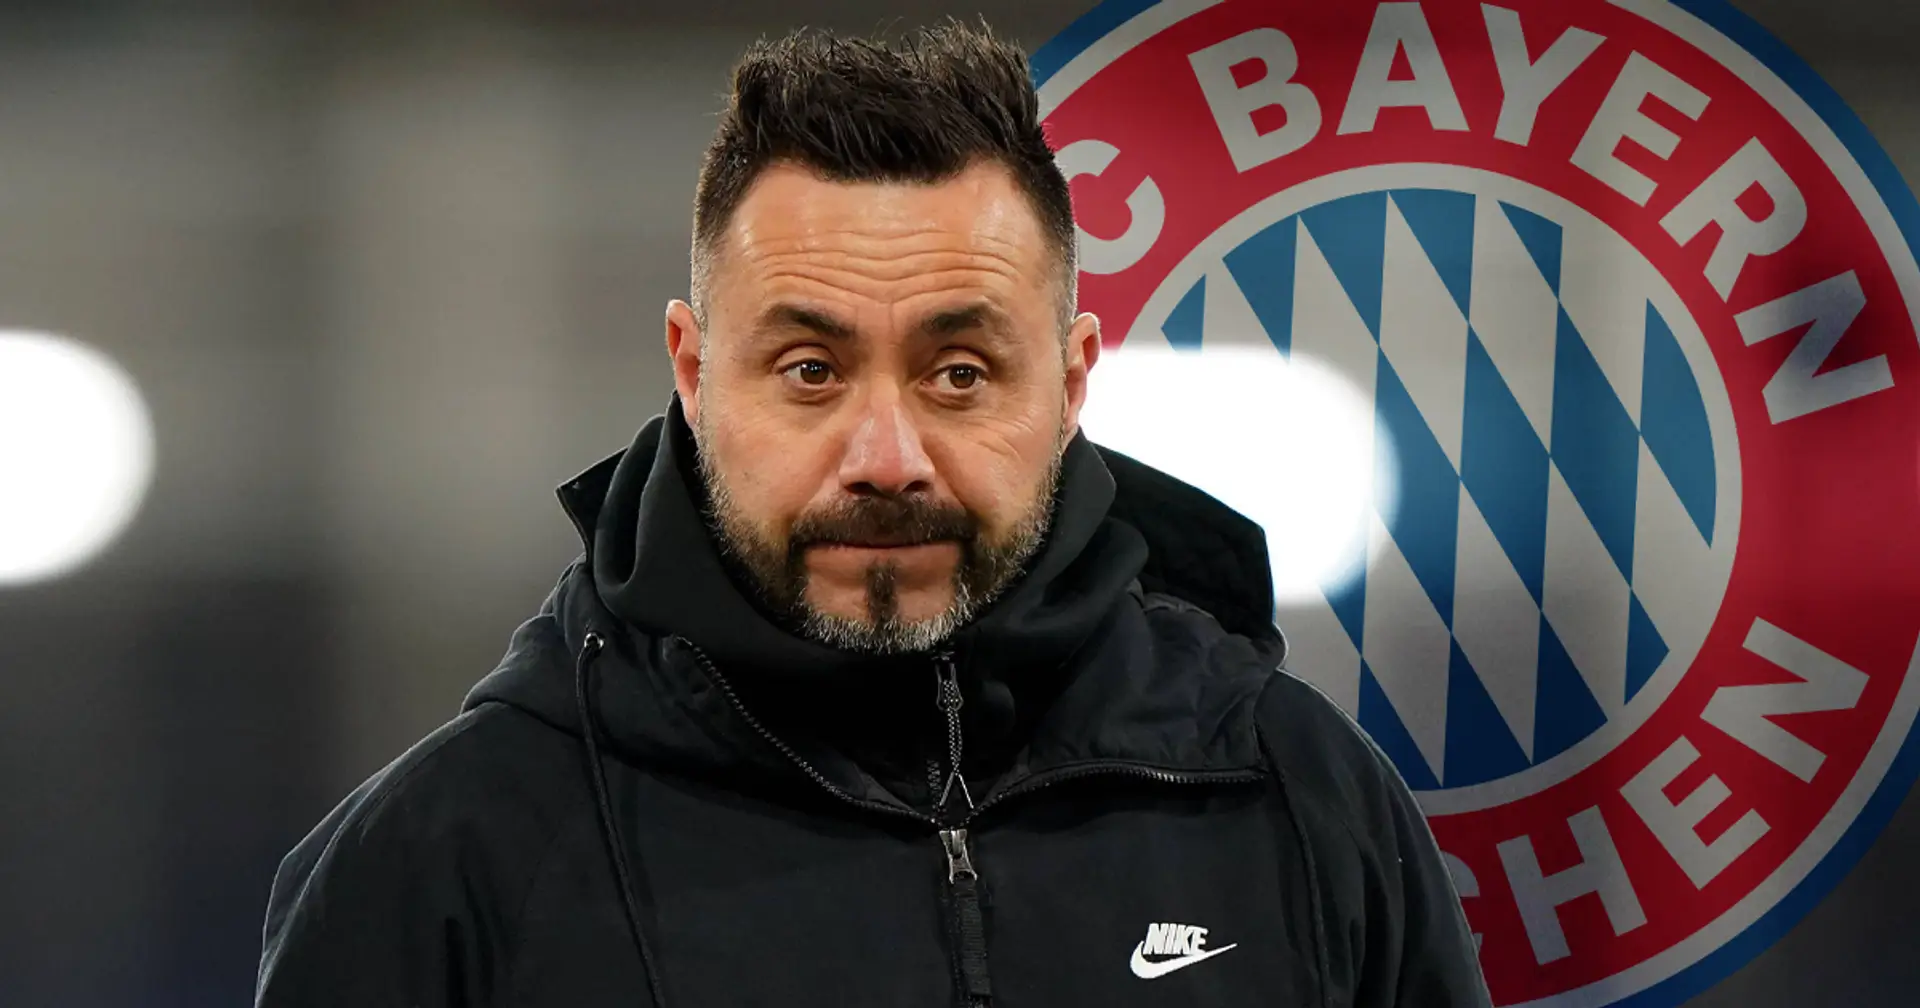 Sprachbarriere als Knackpunkt: Bayern-Bosse zweifeln an De Zerbi als Trainerkandidat